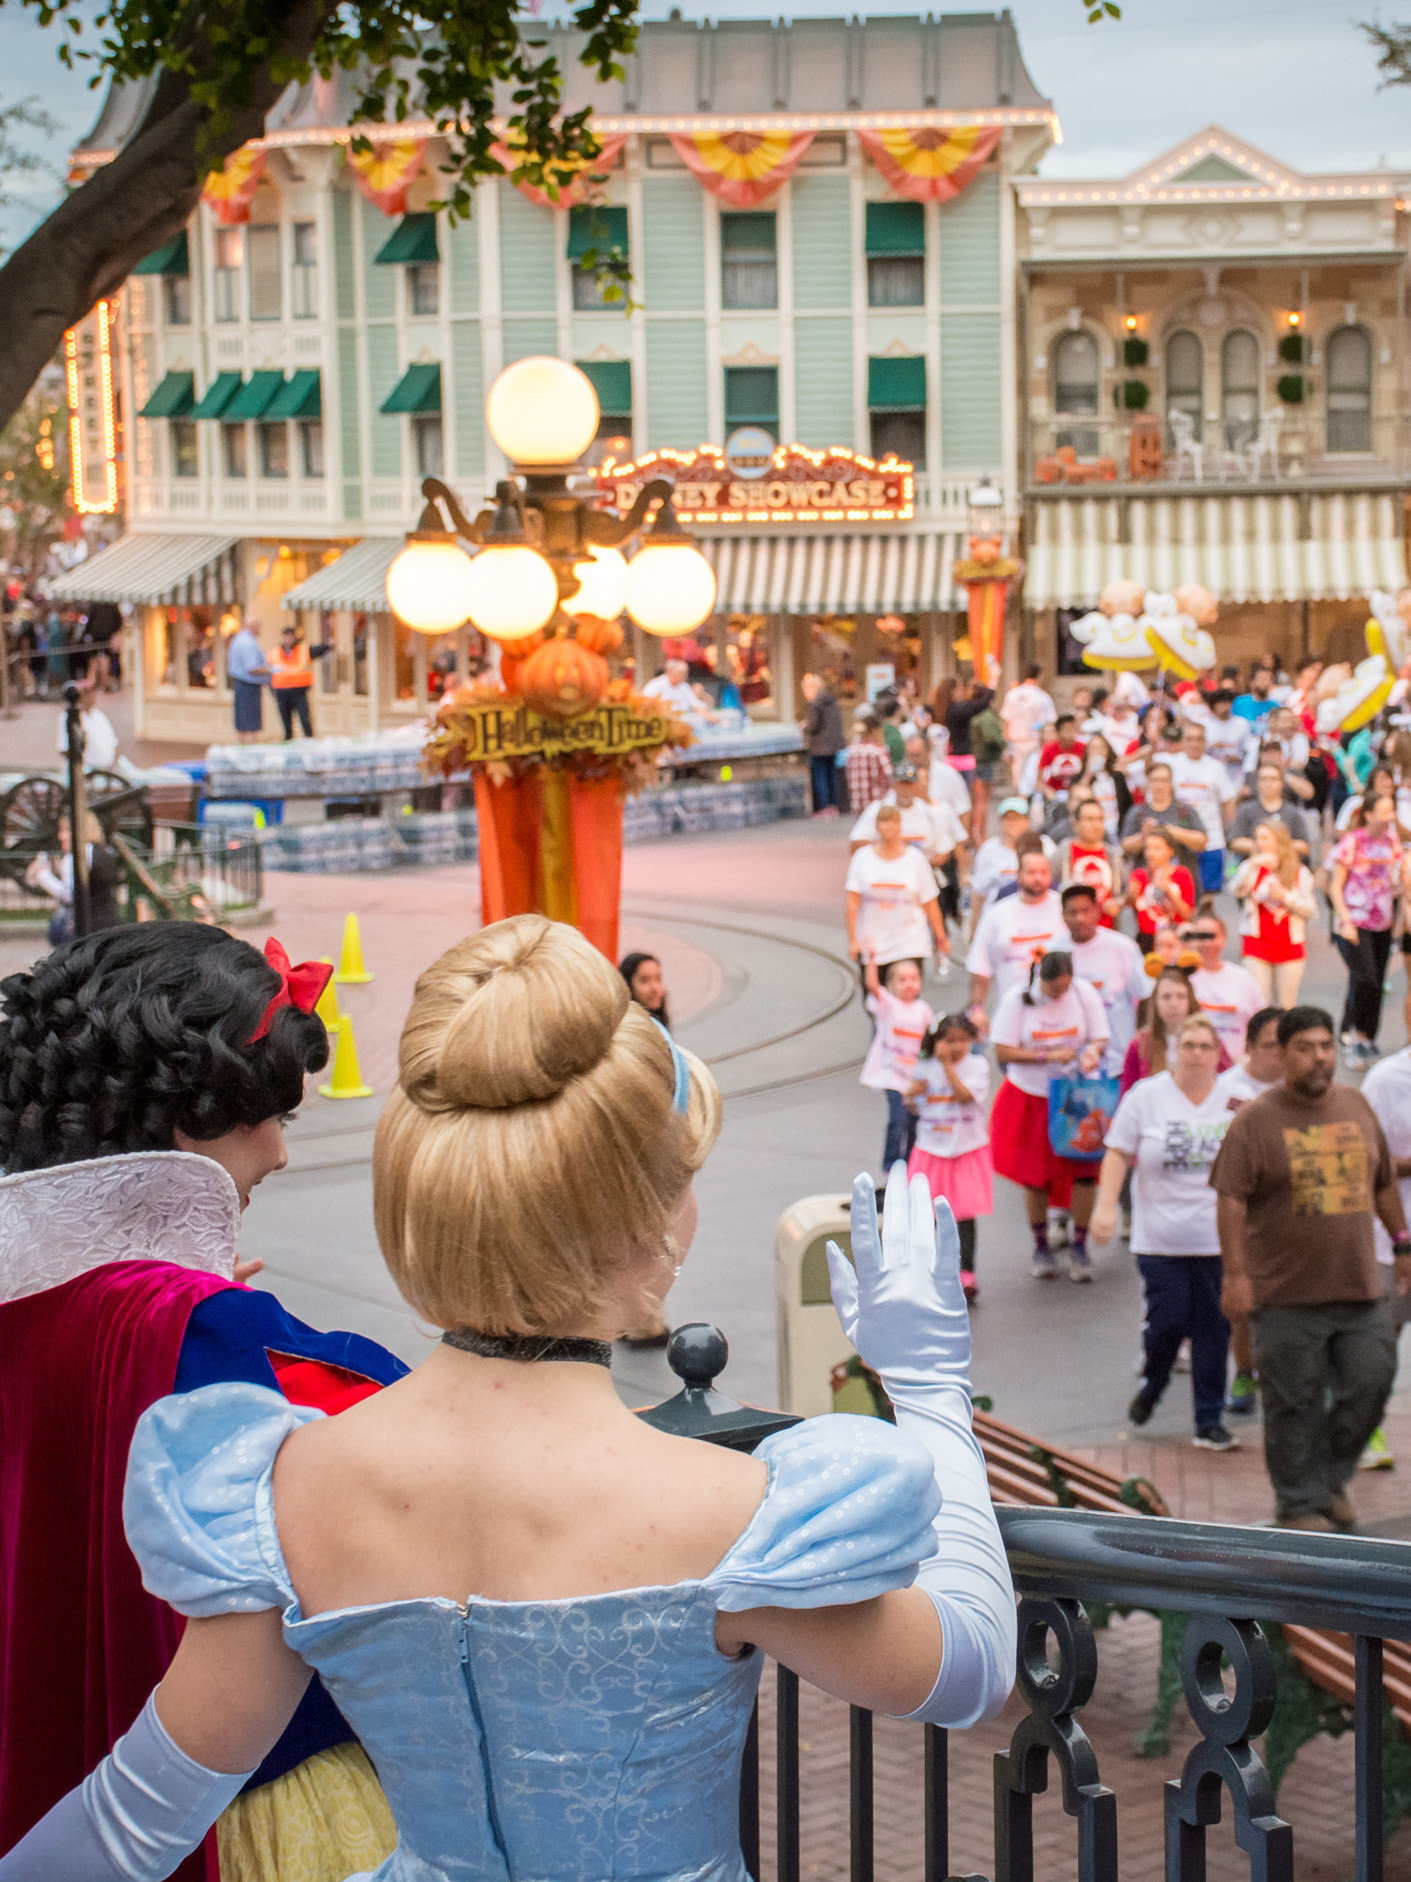 Disney princesses waving to crowd participating in CHOC walk in Disneyland